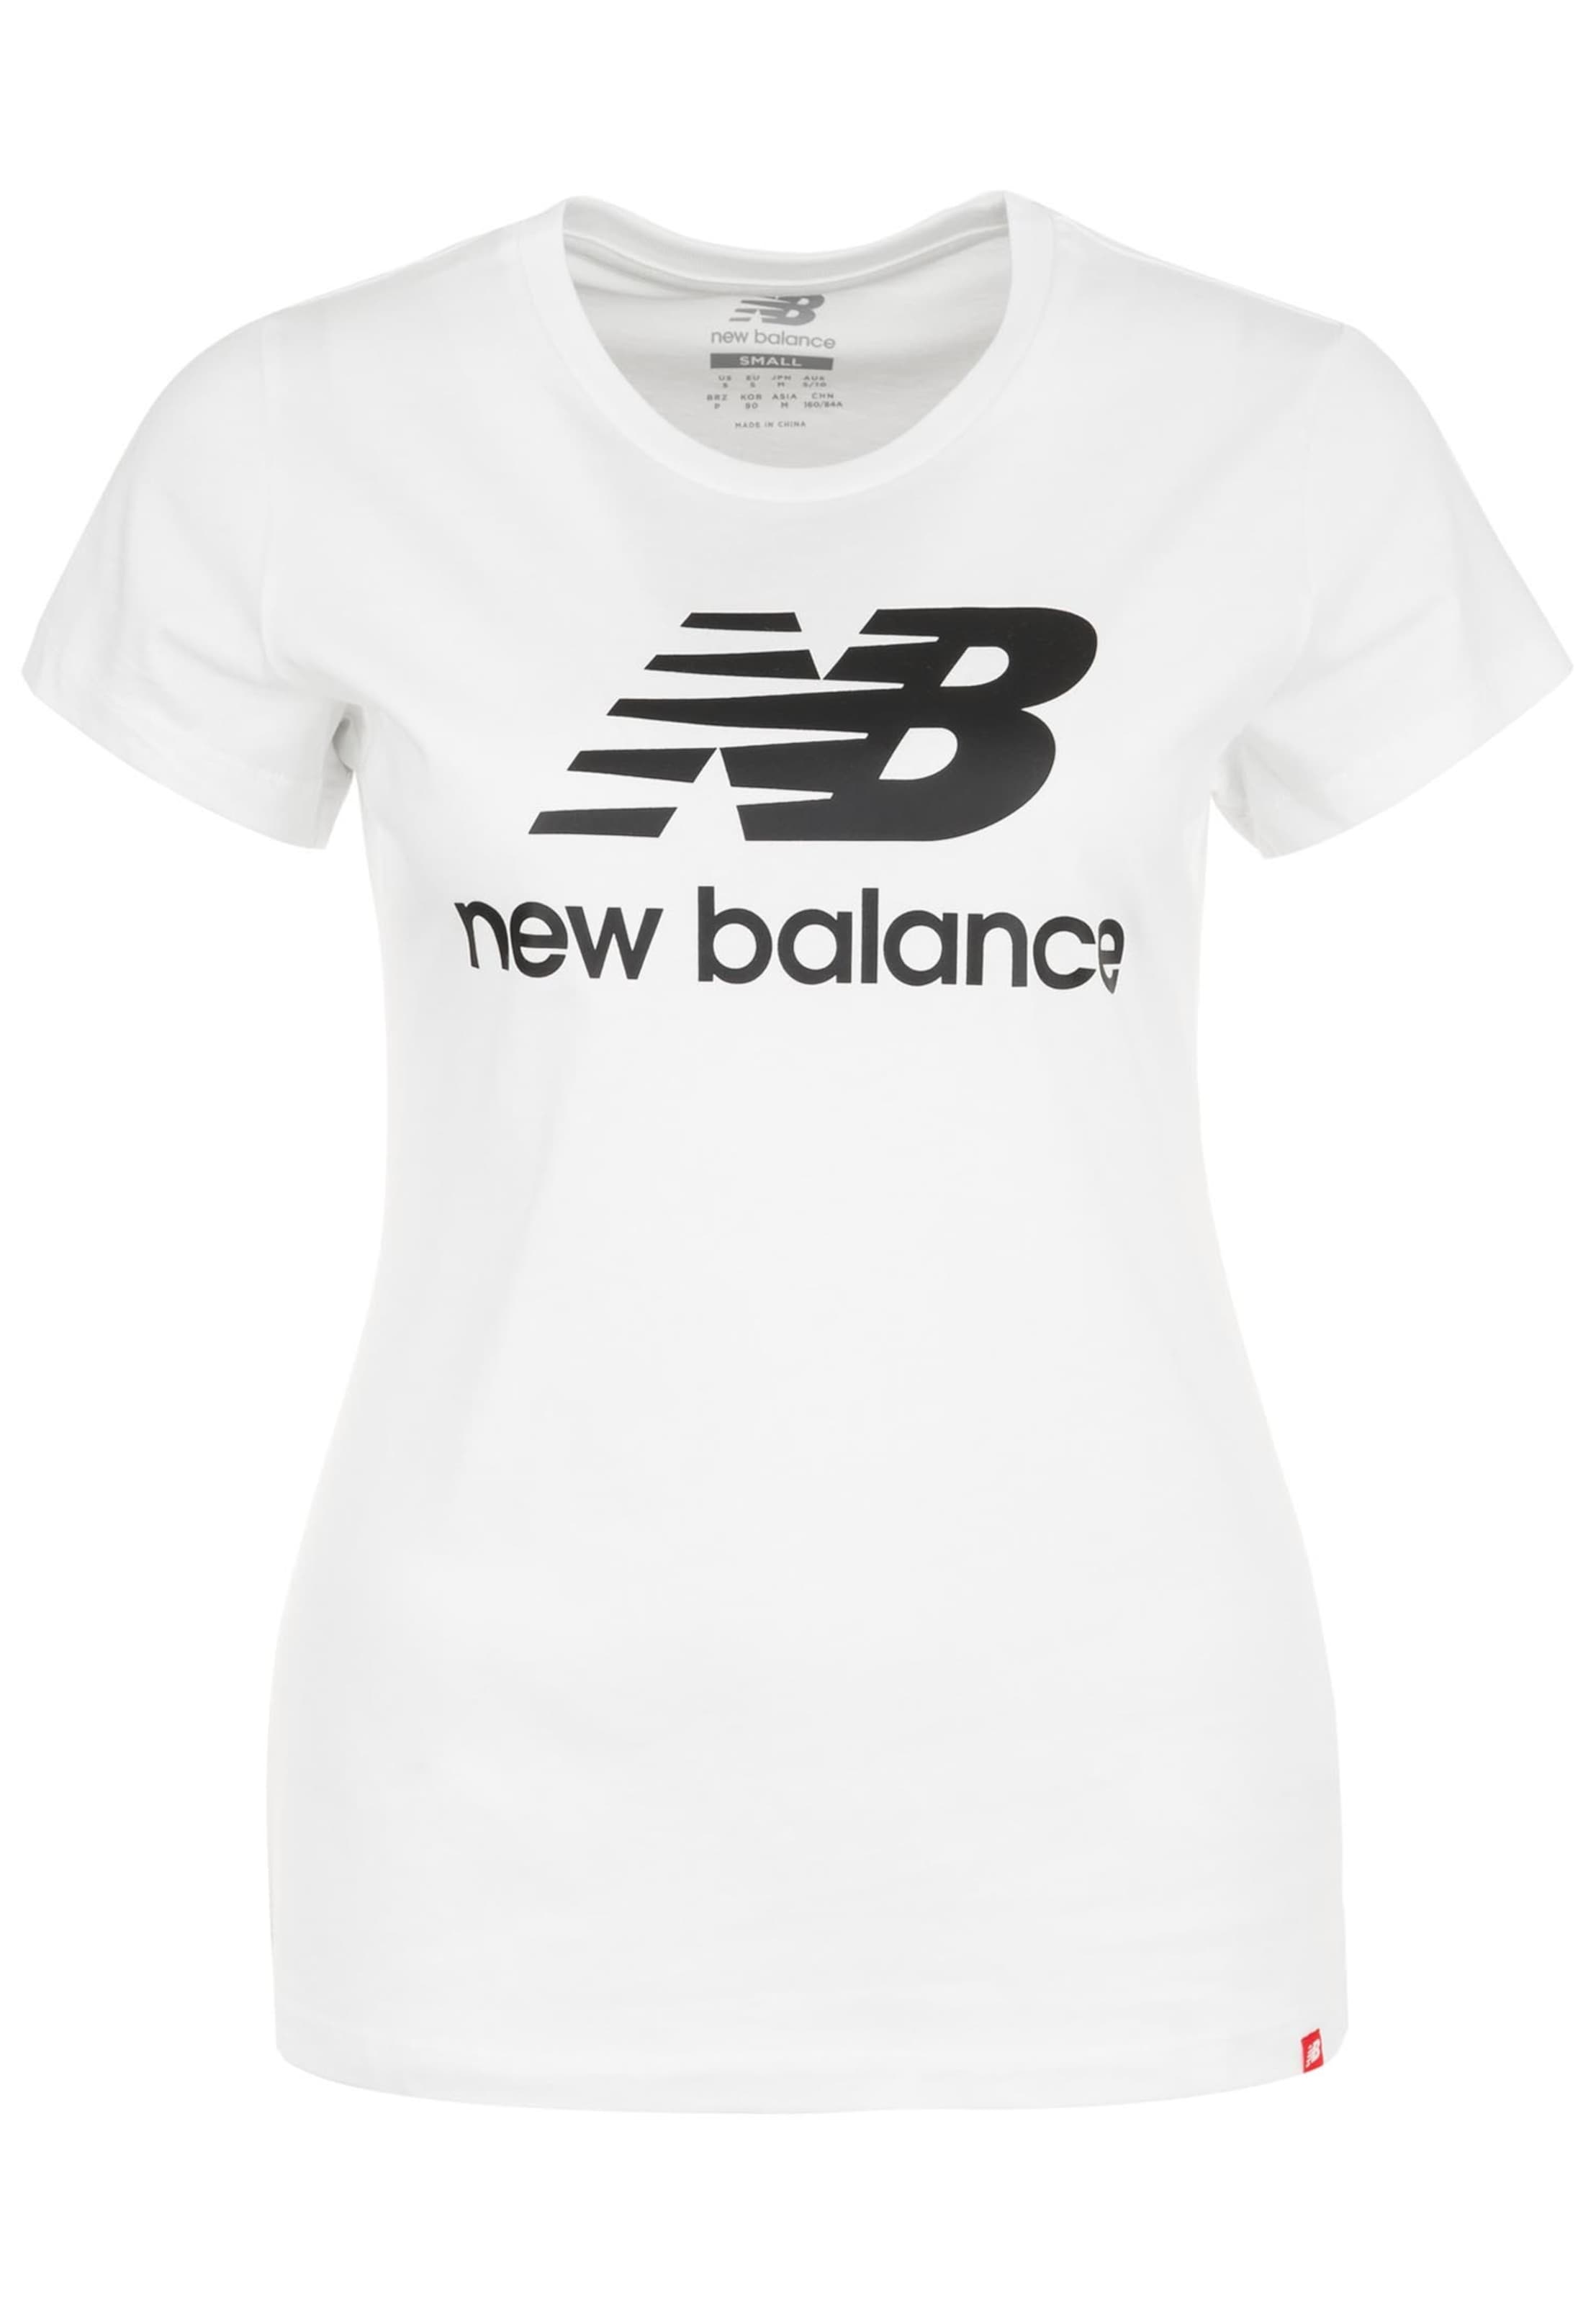 be great shirt new balance